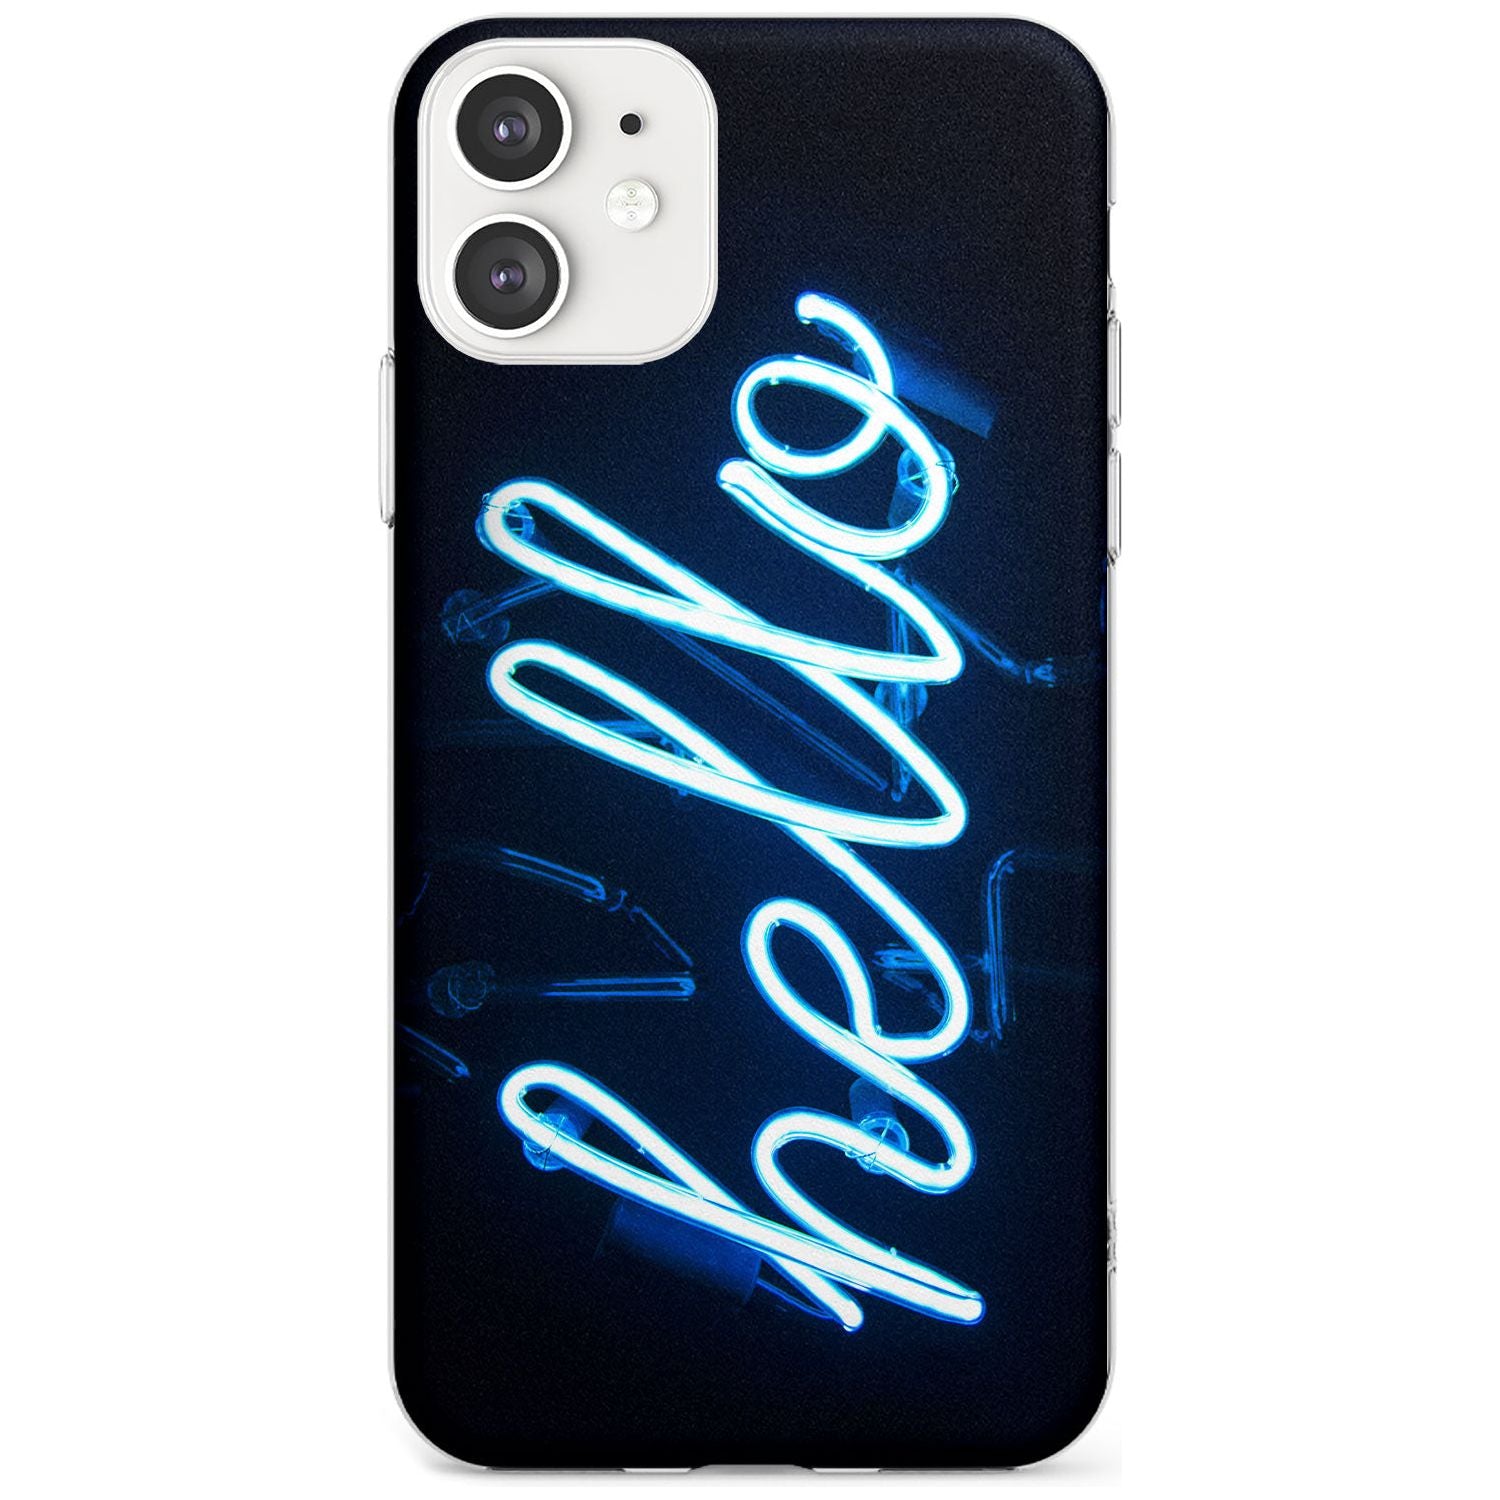 "Hello" Blue Cursive Neon Sign Slim TPU Phone Case for iPhone 11